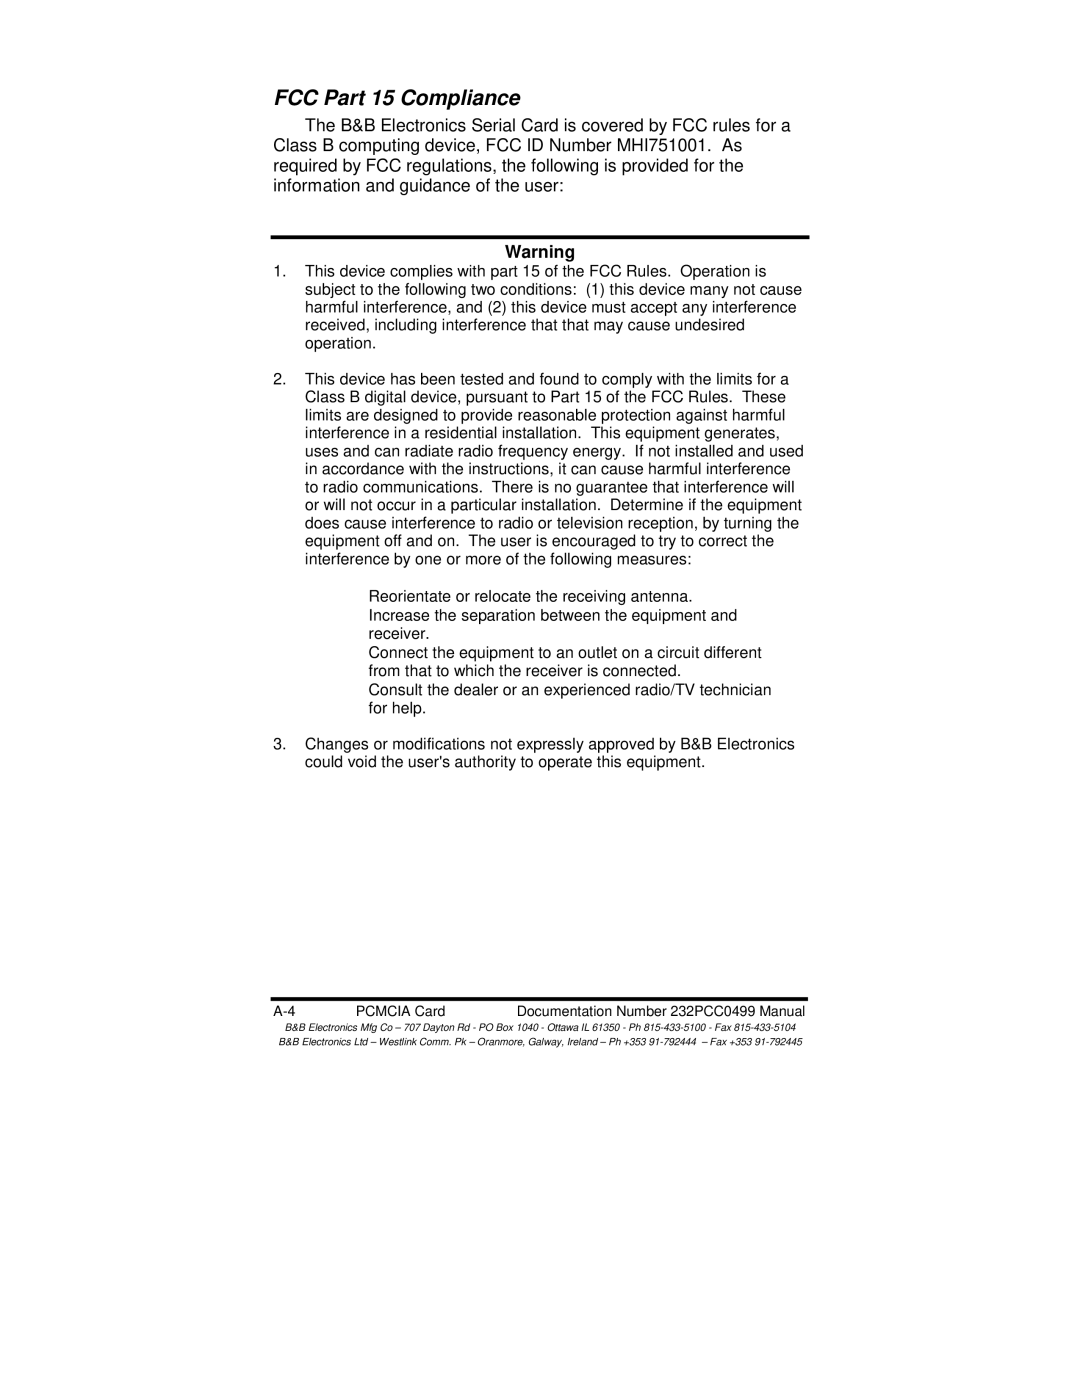 B&B Electronics 232PCC manual FCC Part 15 Compliance 